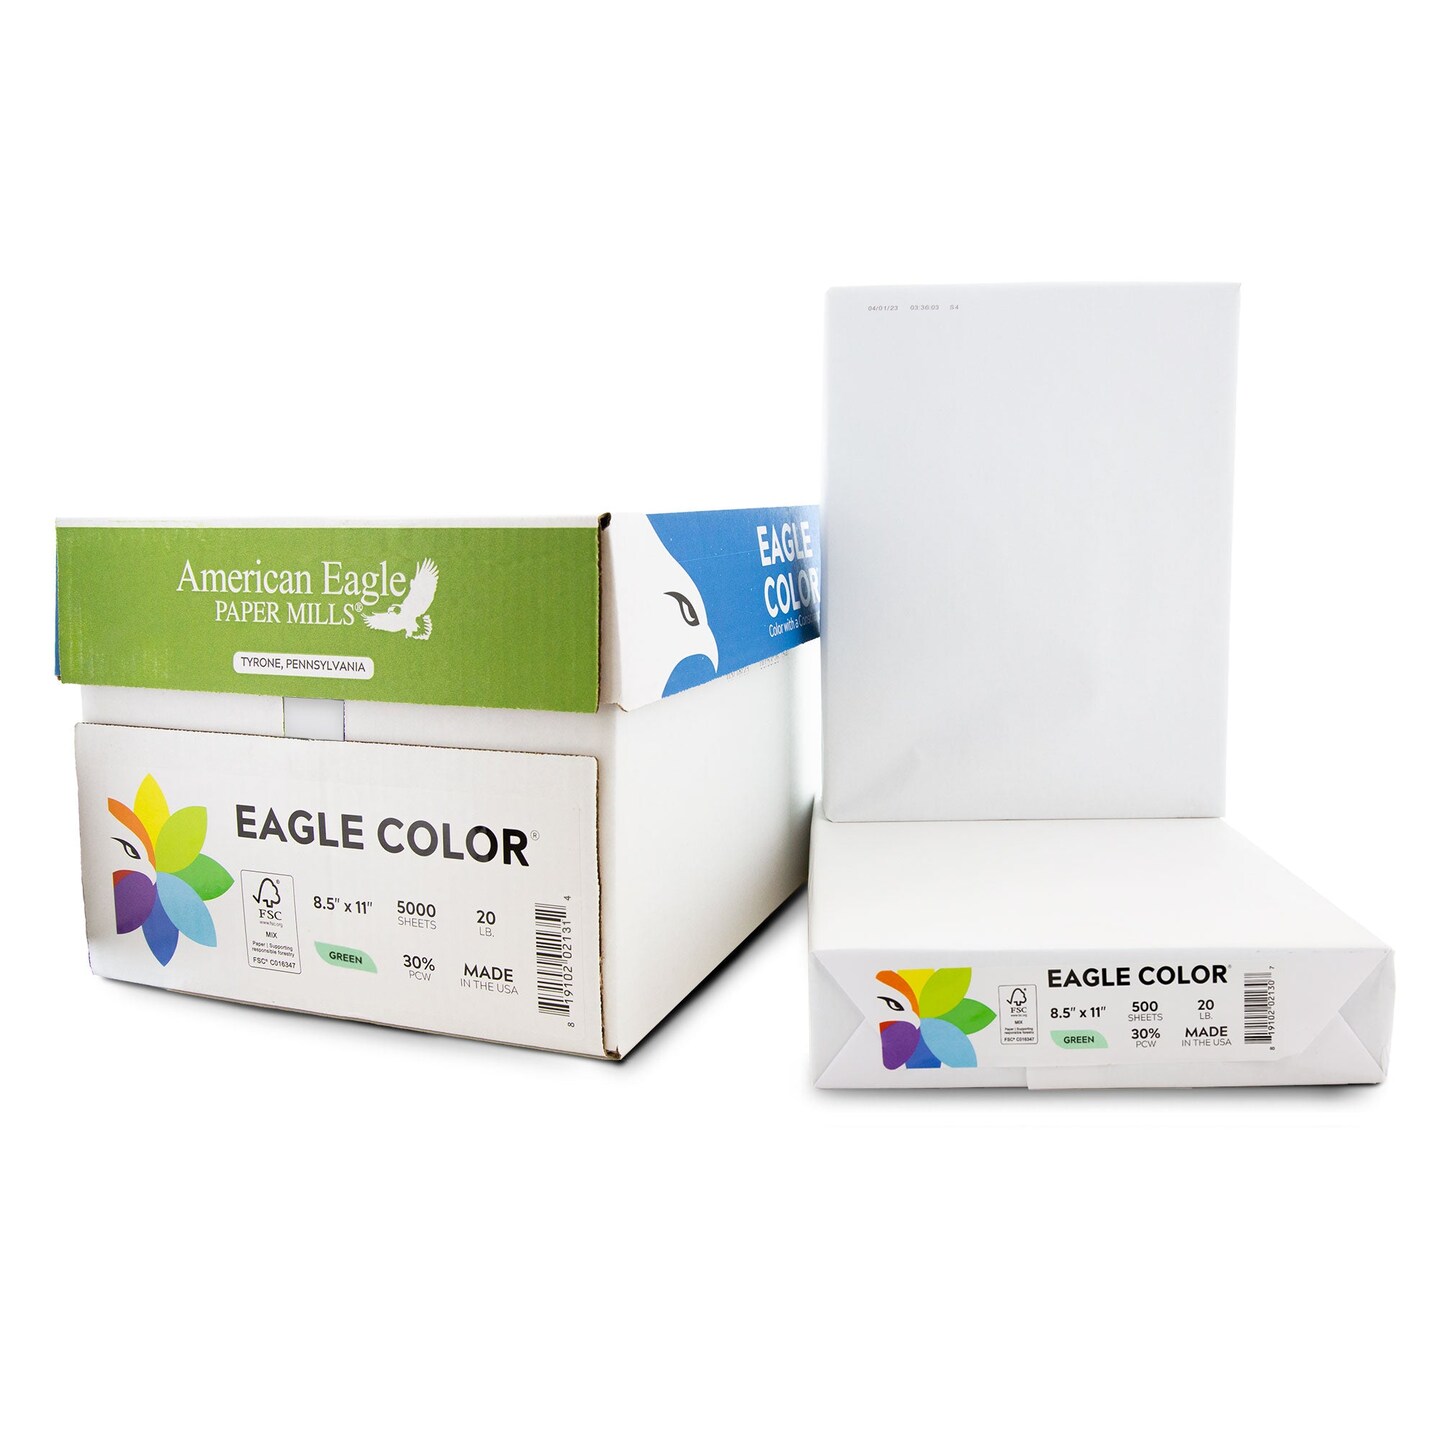 EAGLE COLOR (30% PCW) 8.5&#x22; X 11&#x22; Green Colored Copy Paper (500 Sheets/Ream)